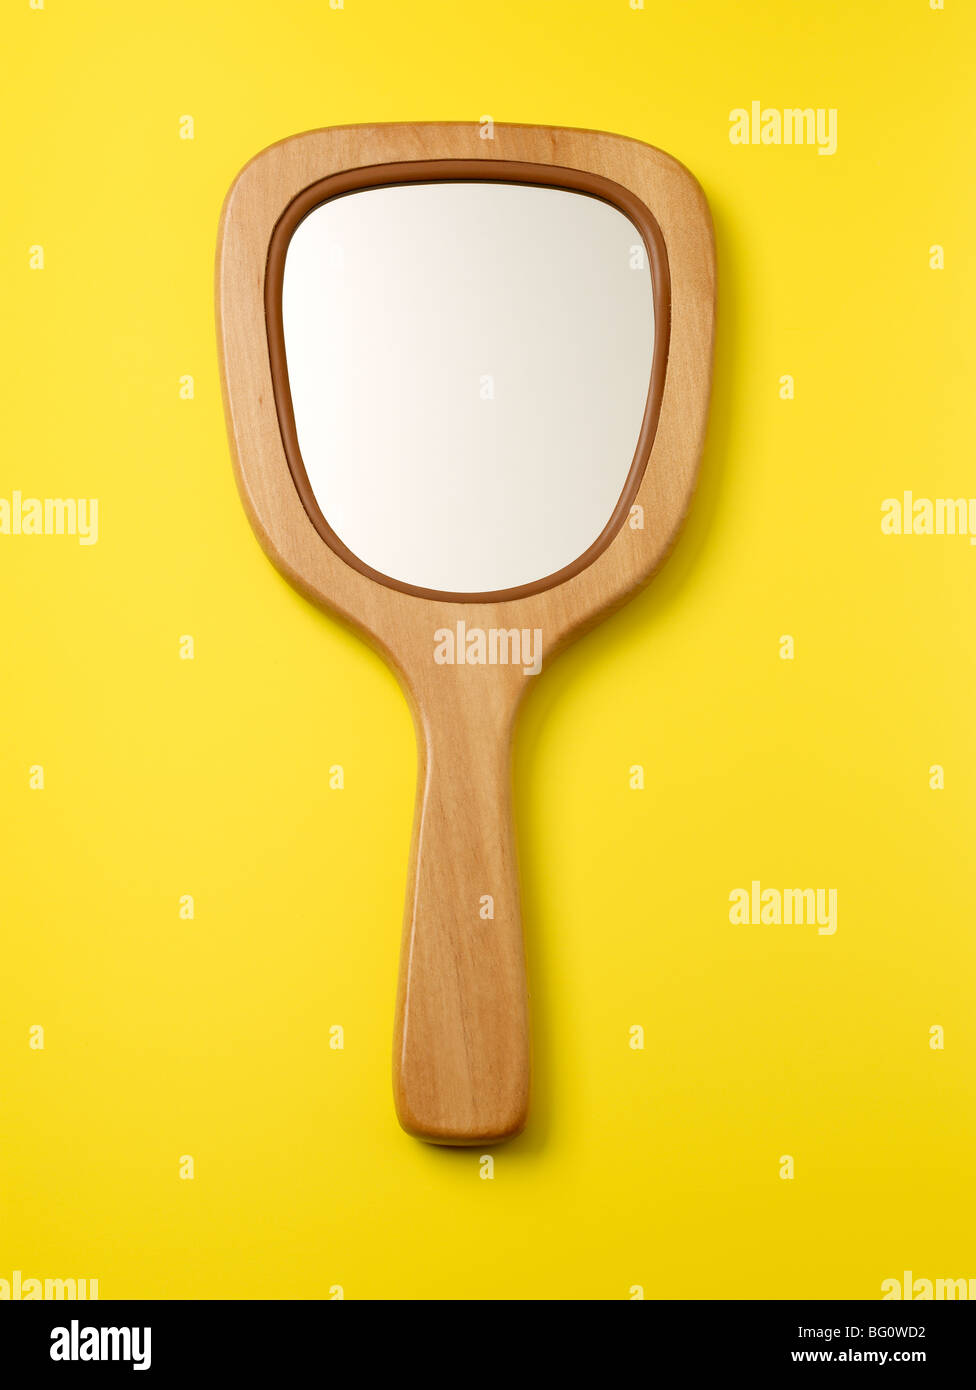 Wooden Framed Hand Held Mirror Stock Photo